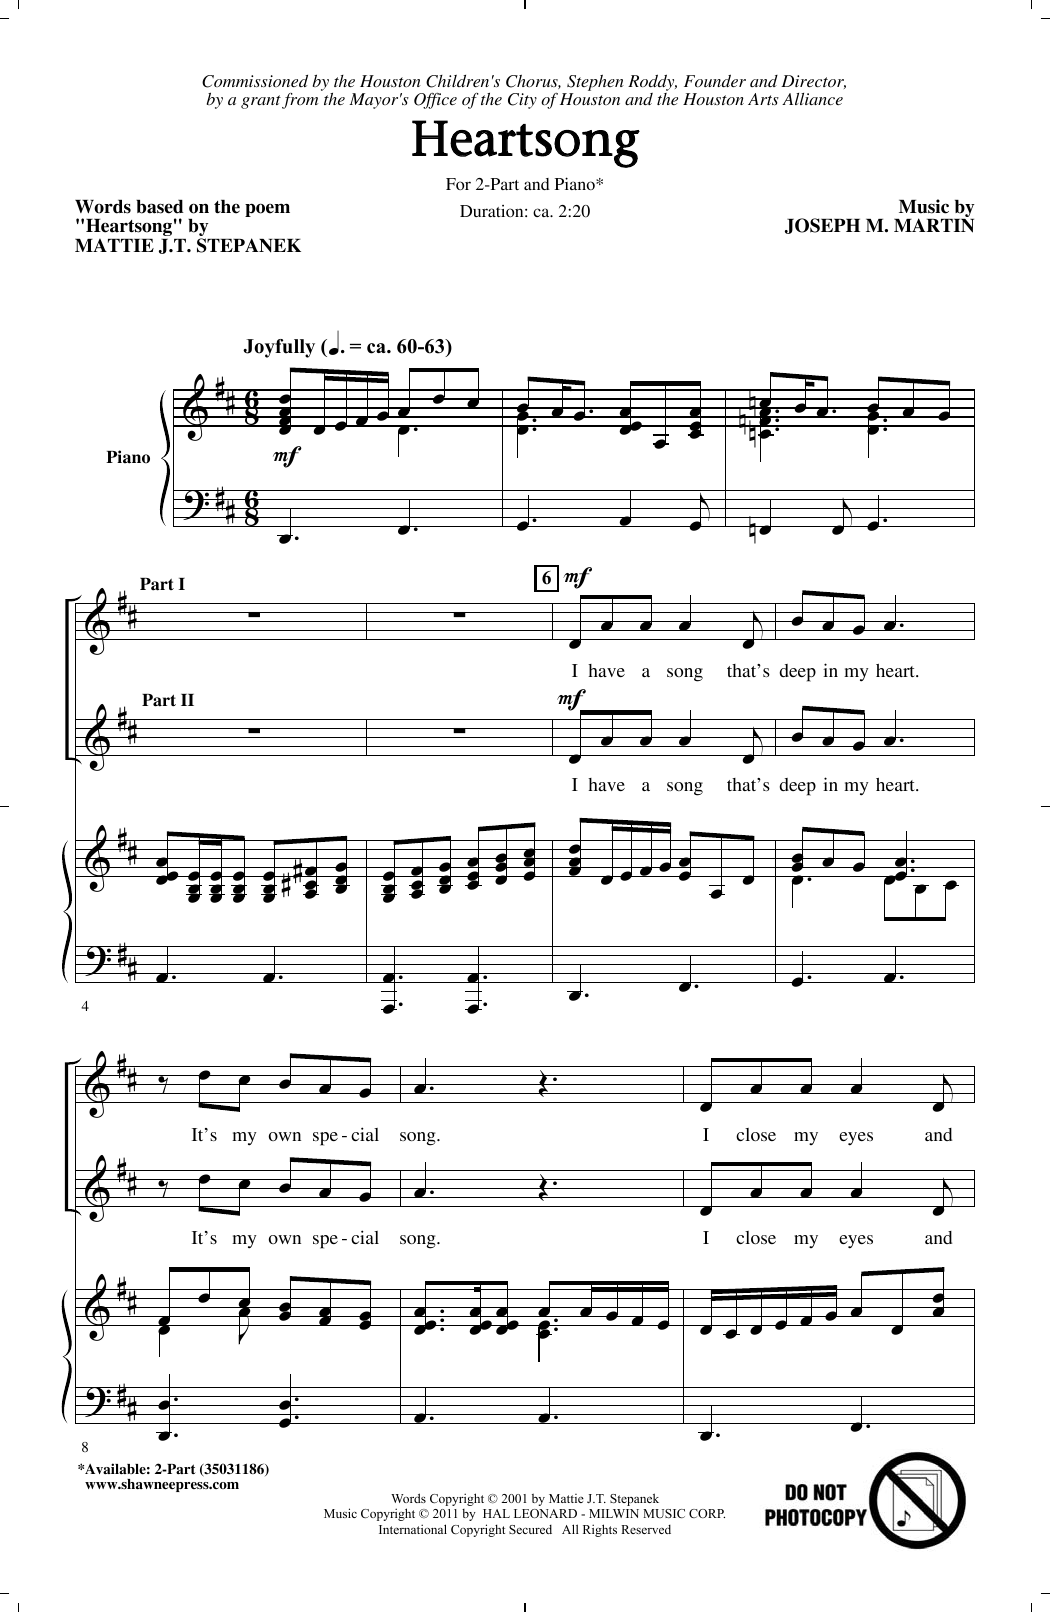 Joseph Martin Heartsong sheet music notes and chords arranged for 2-Part Choir